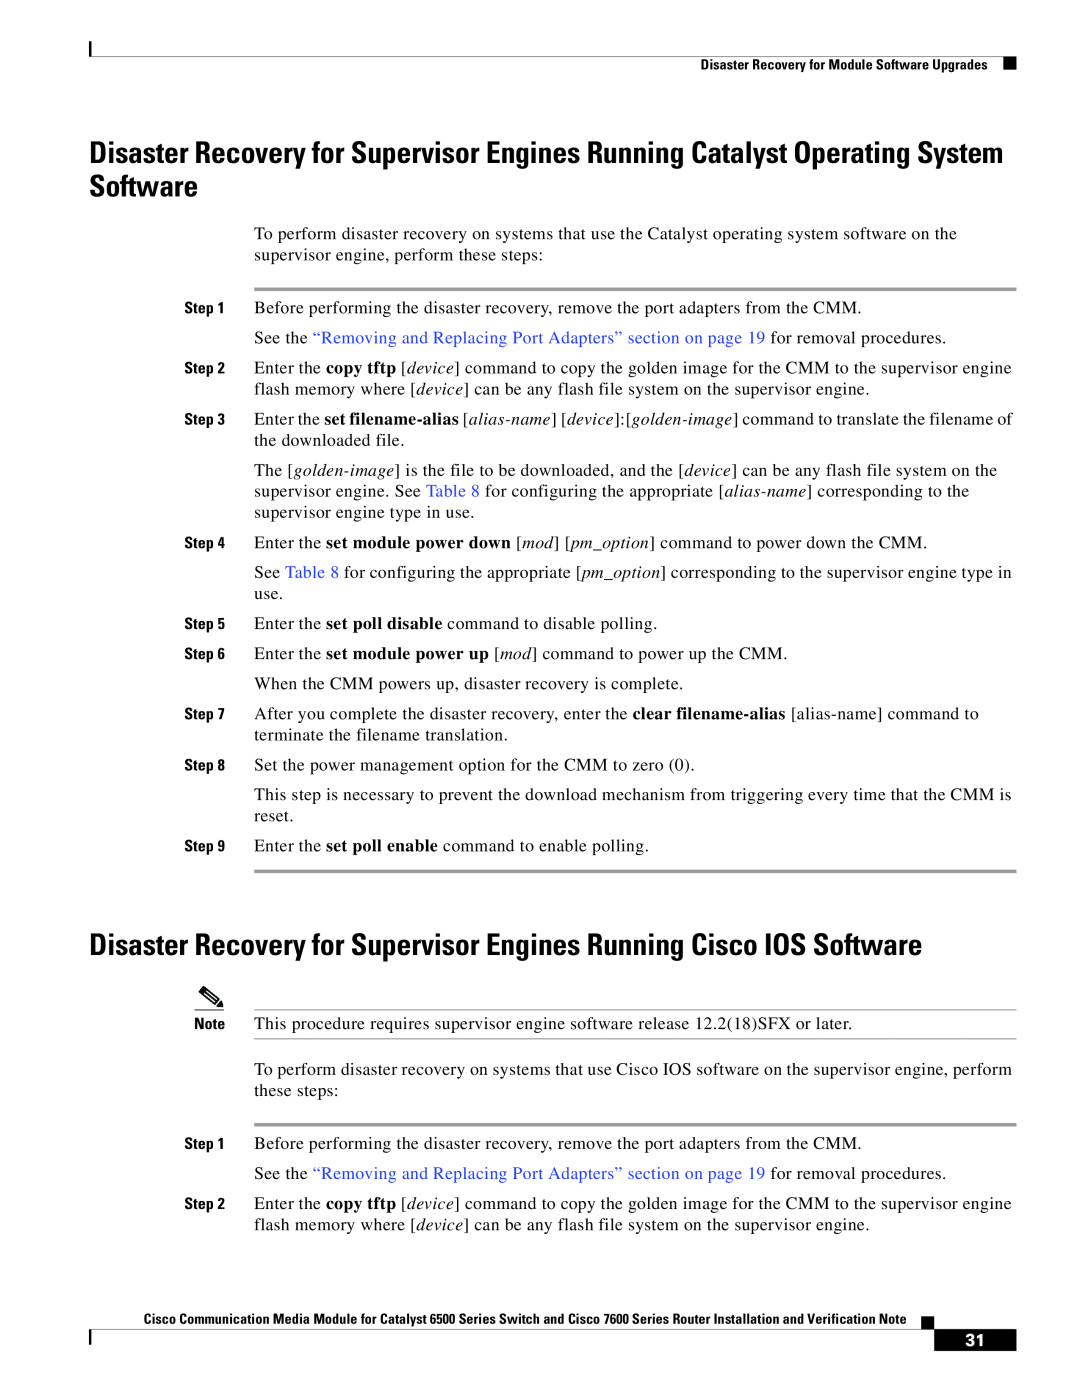 Cisco Systems 6500-E, WS-C6513-E-RF manual Disaster Recovery for Supervisor Engines Running Cisco IOS Software 